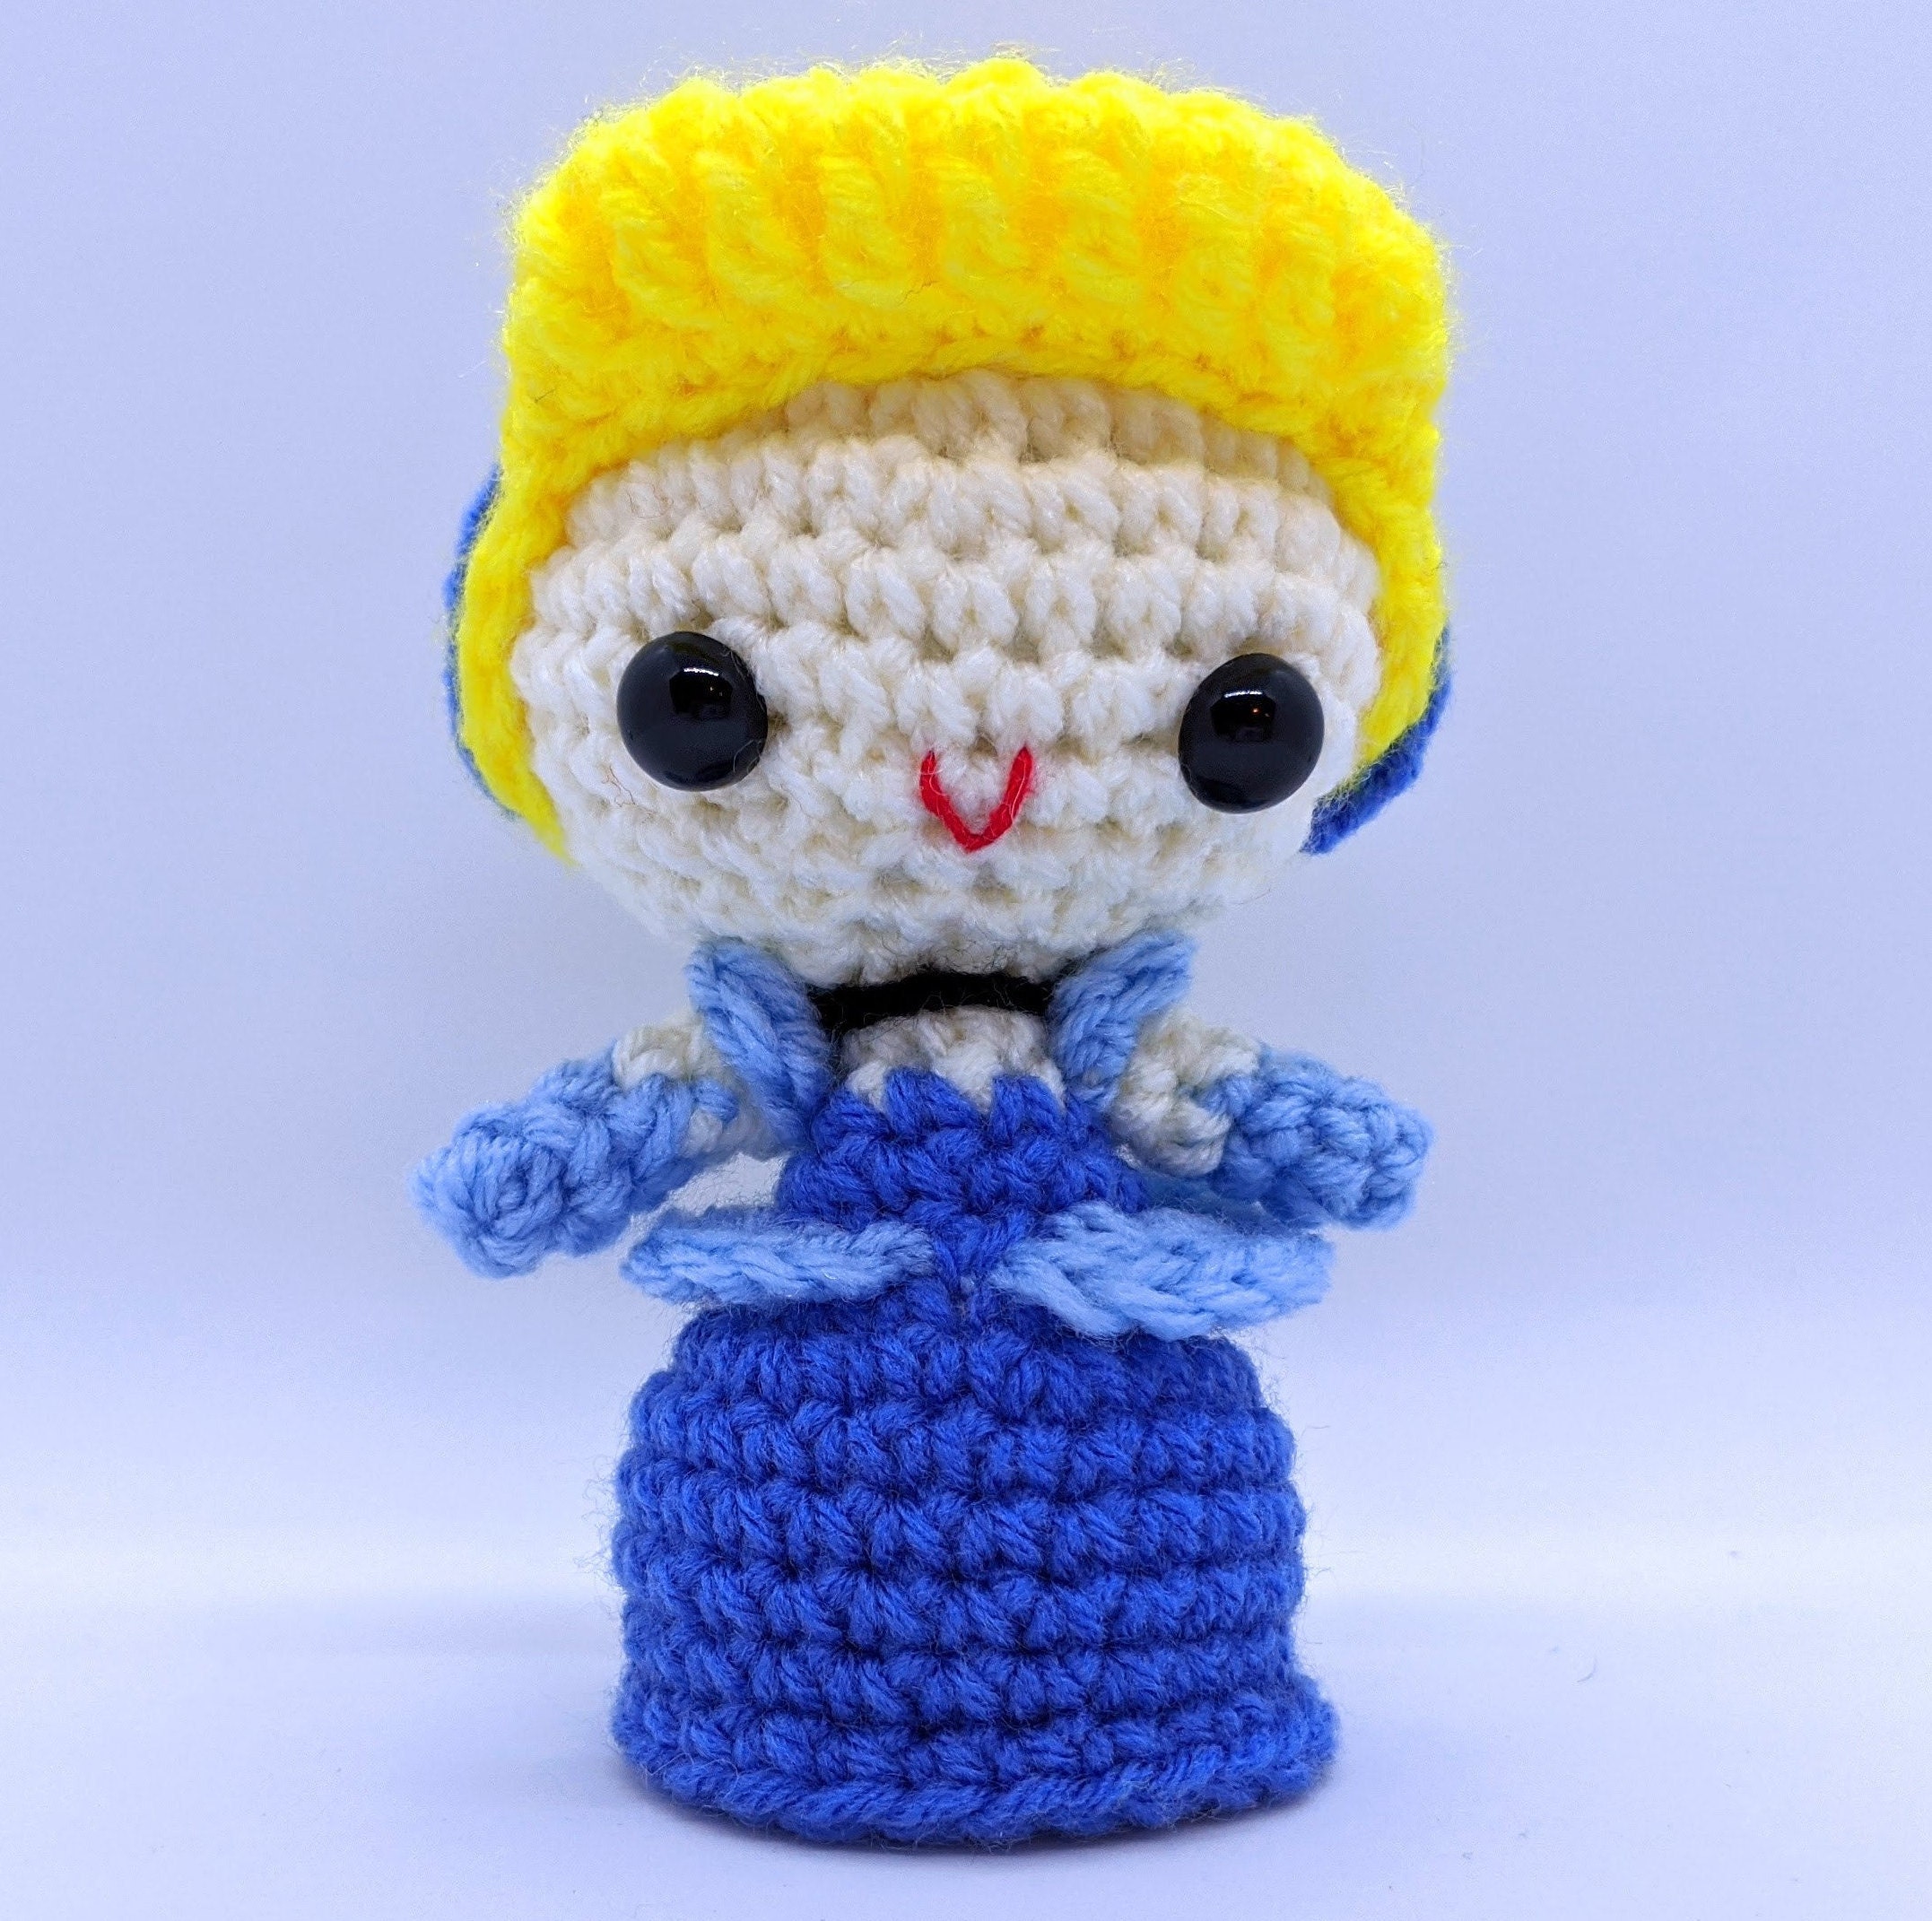 Disney Princess Crochet kit Ariel Doll complete tutorial 